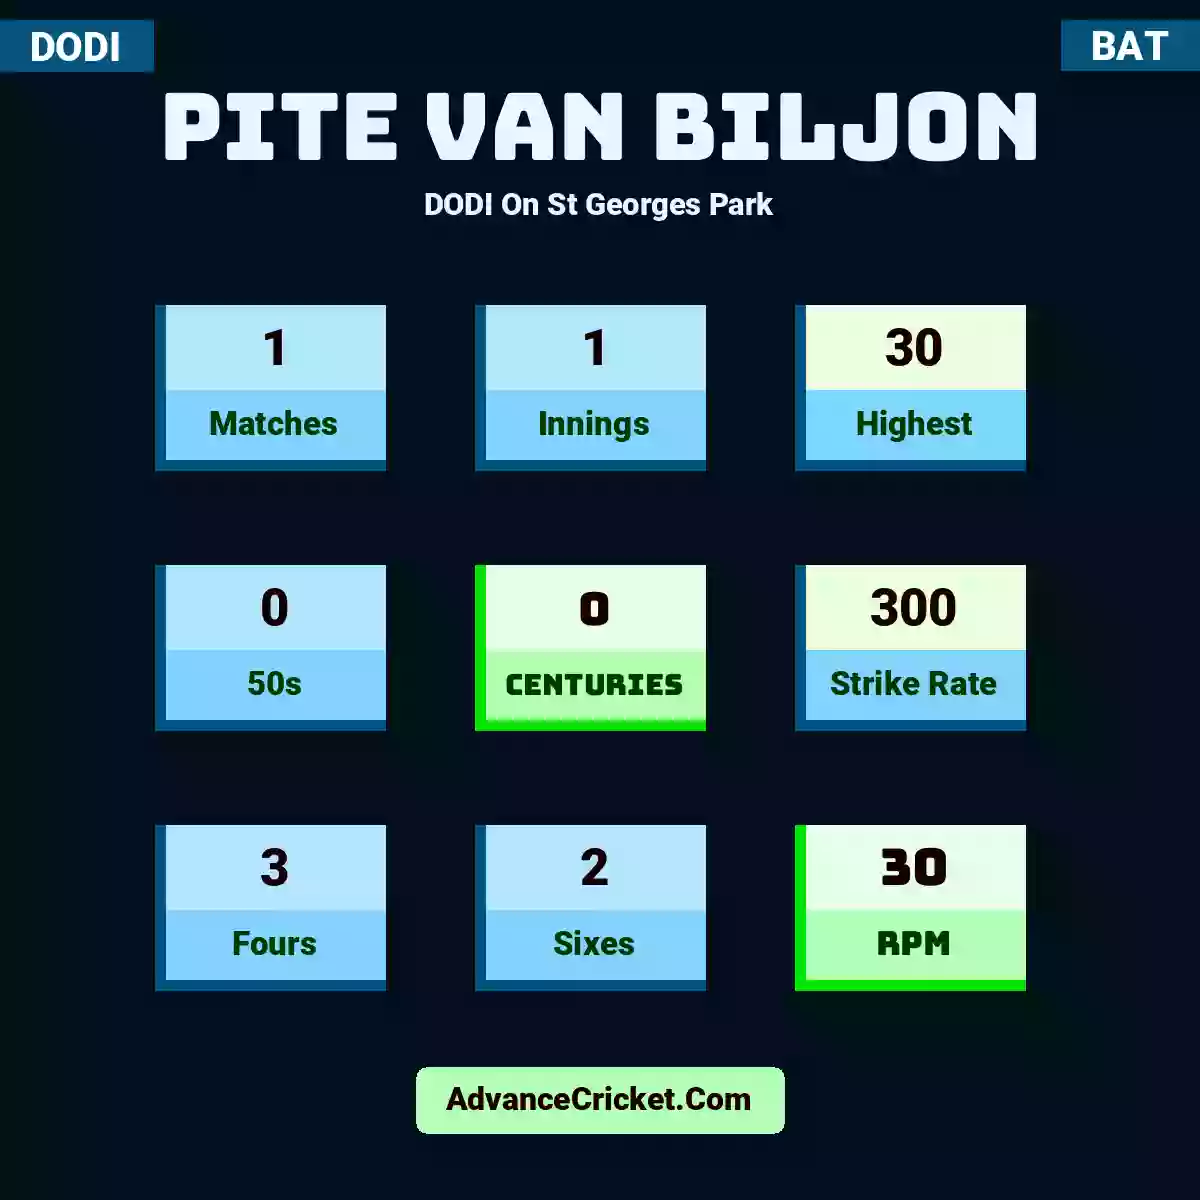 Pite van Biljon DODI  On St Georges Park, Pite van Biljon played 1 matches, scored 30 runs as highest, 0 half-centuries, and 0 centuries, with a strike rate of 300. P.VBiljon hit 3 fours and 2 sixes, with an RPM of 30.